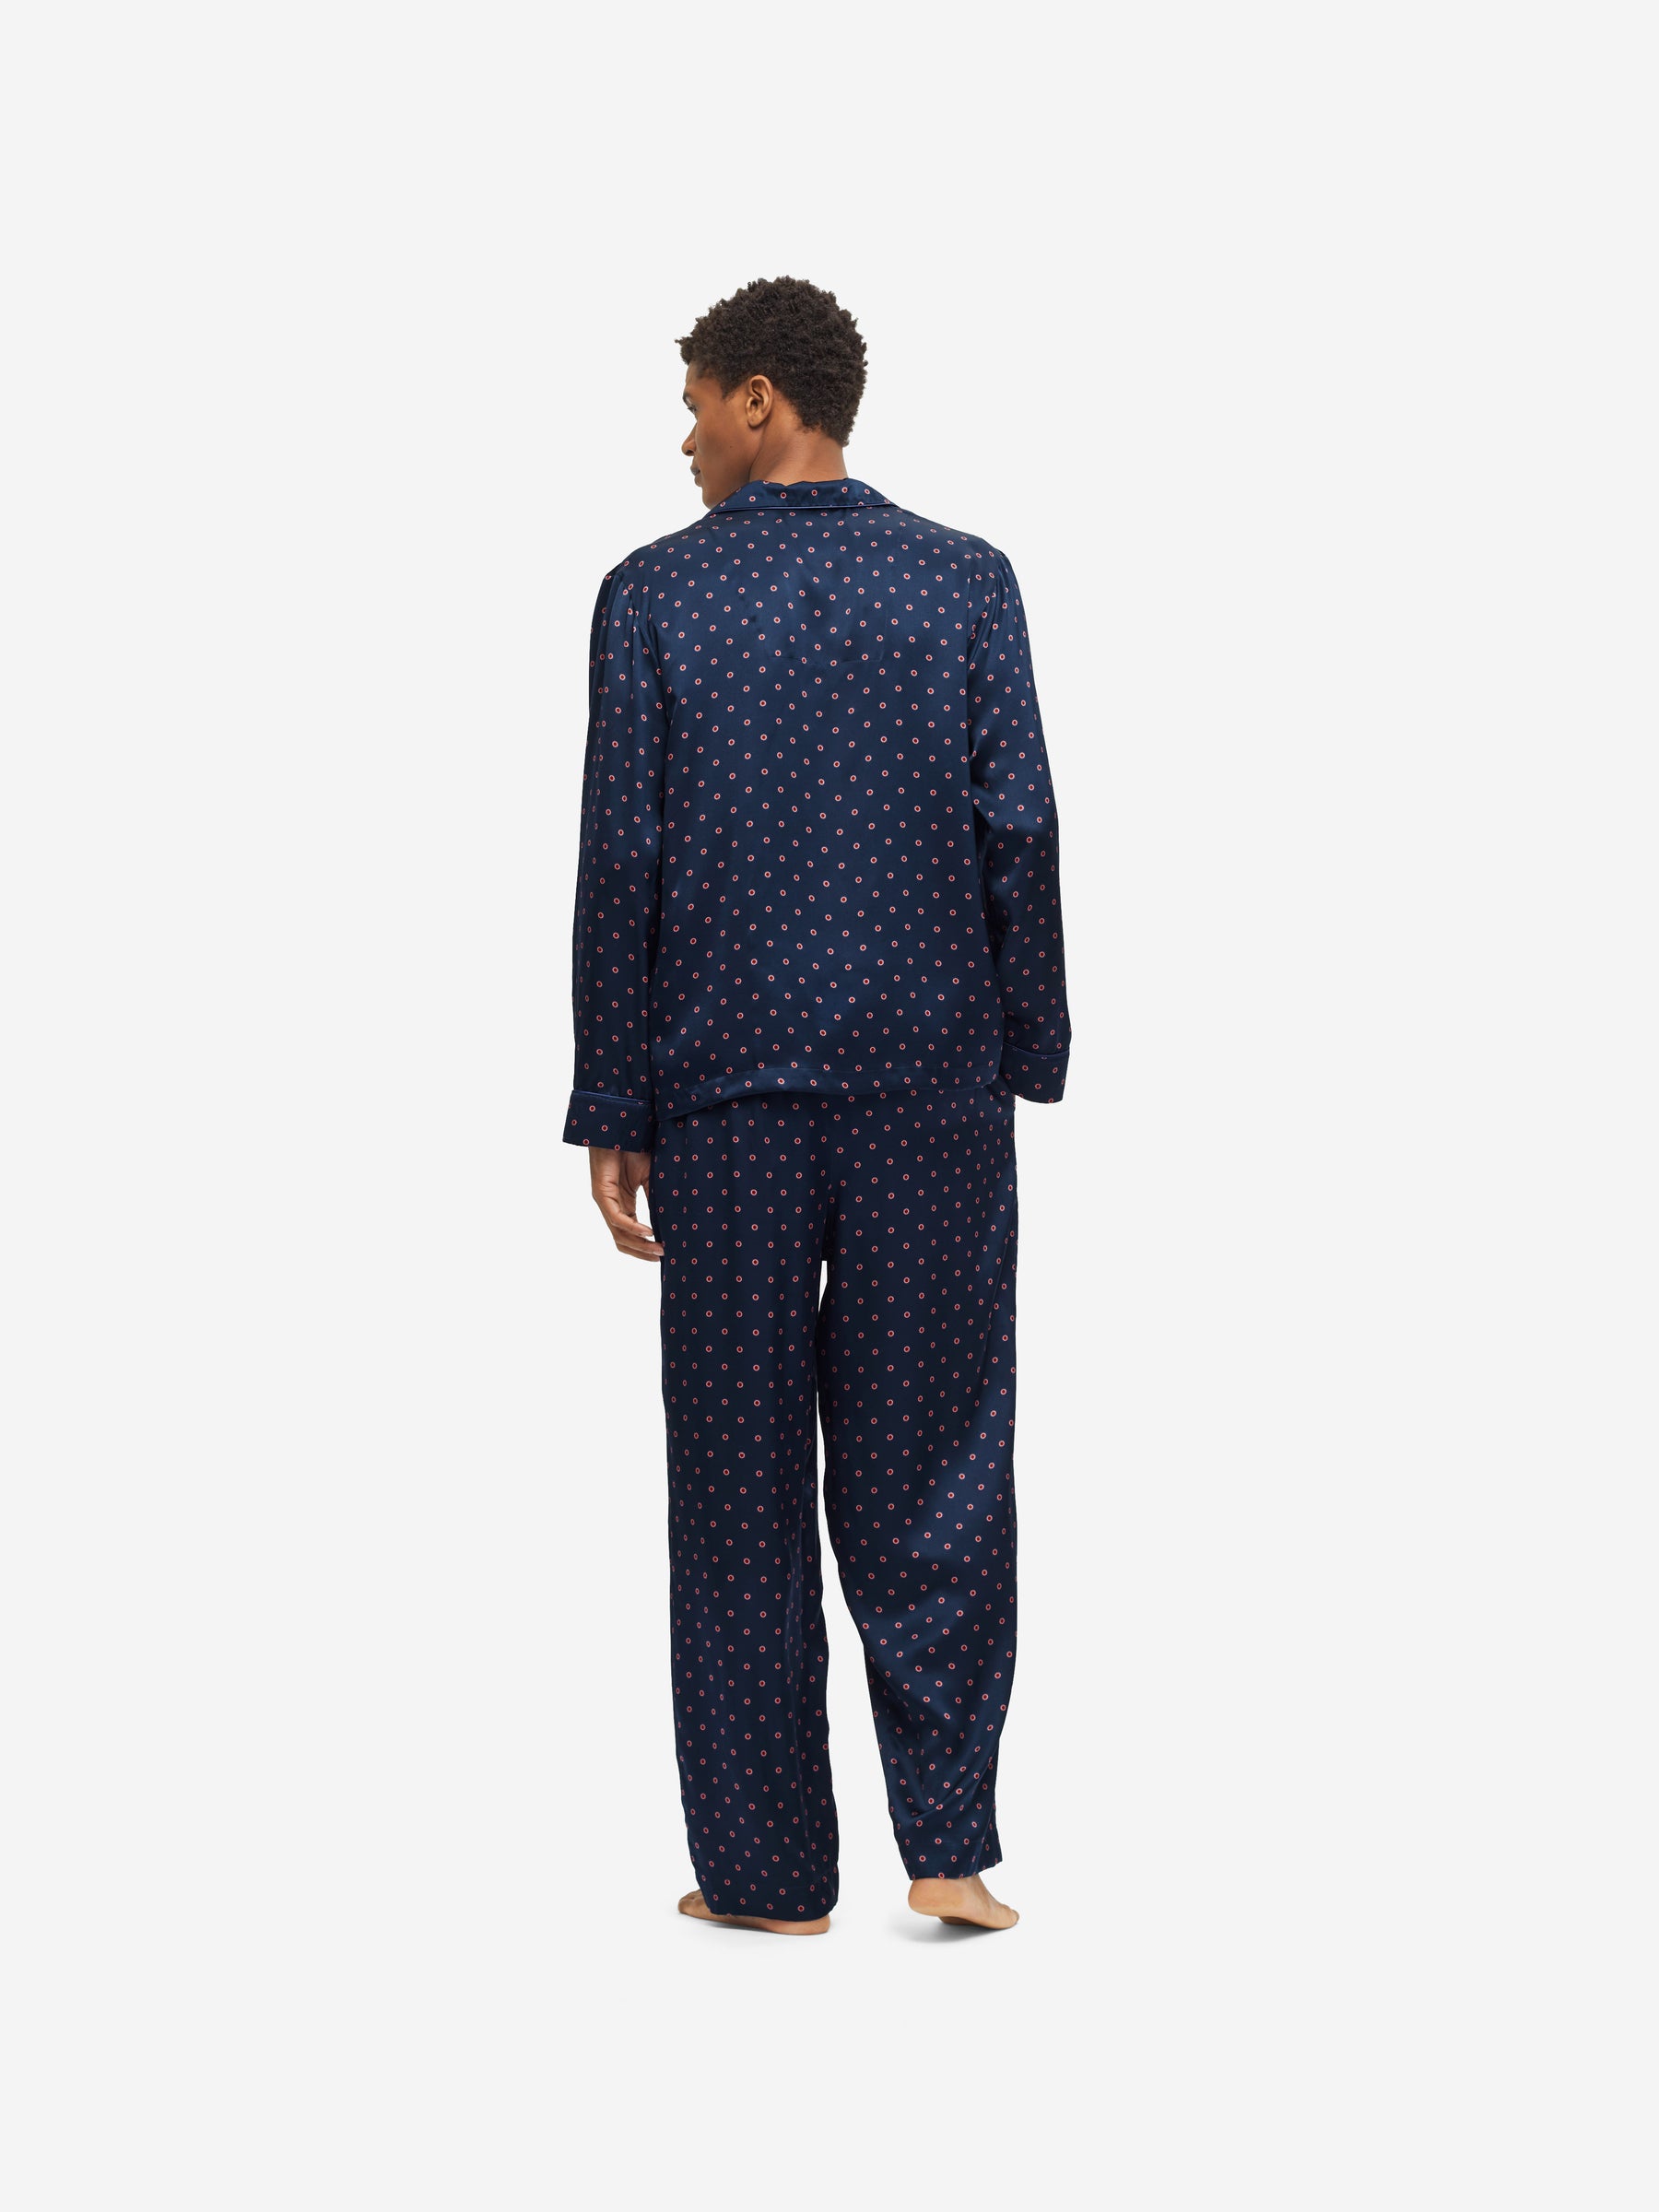 Men's Pyjamas Brindisi 79 Silk Satin Navy